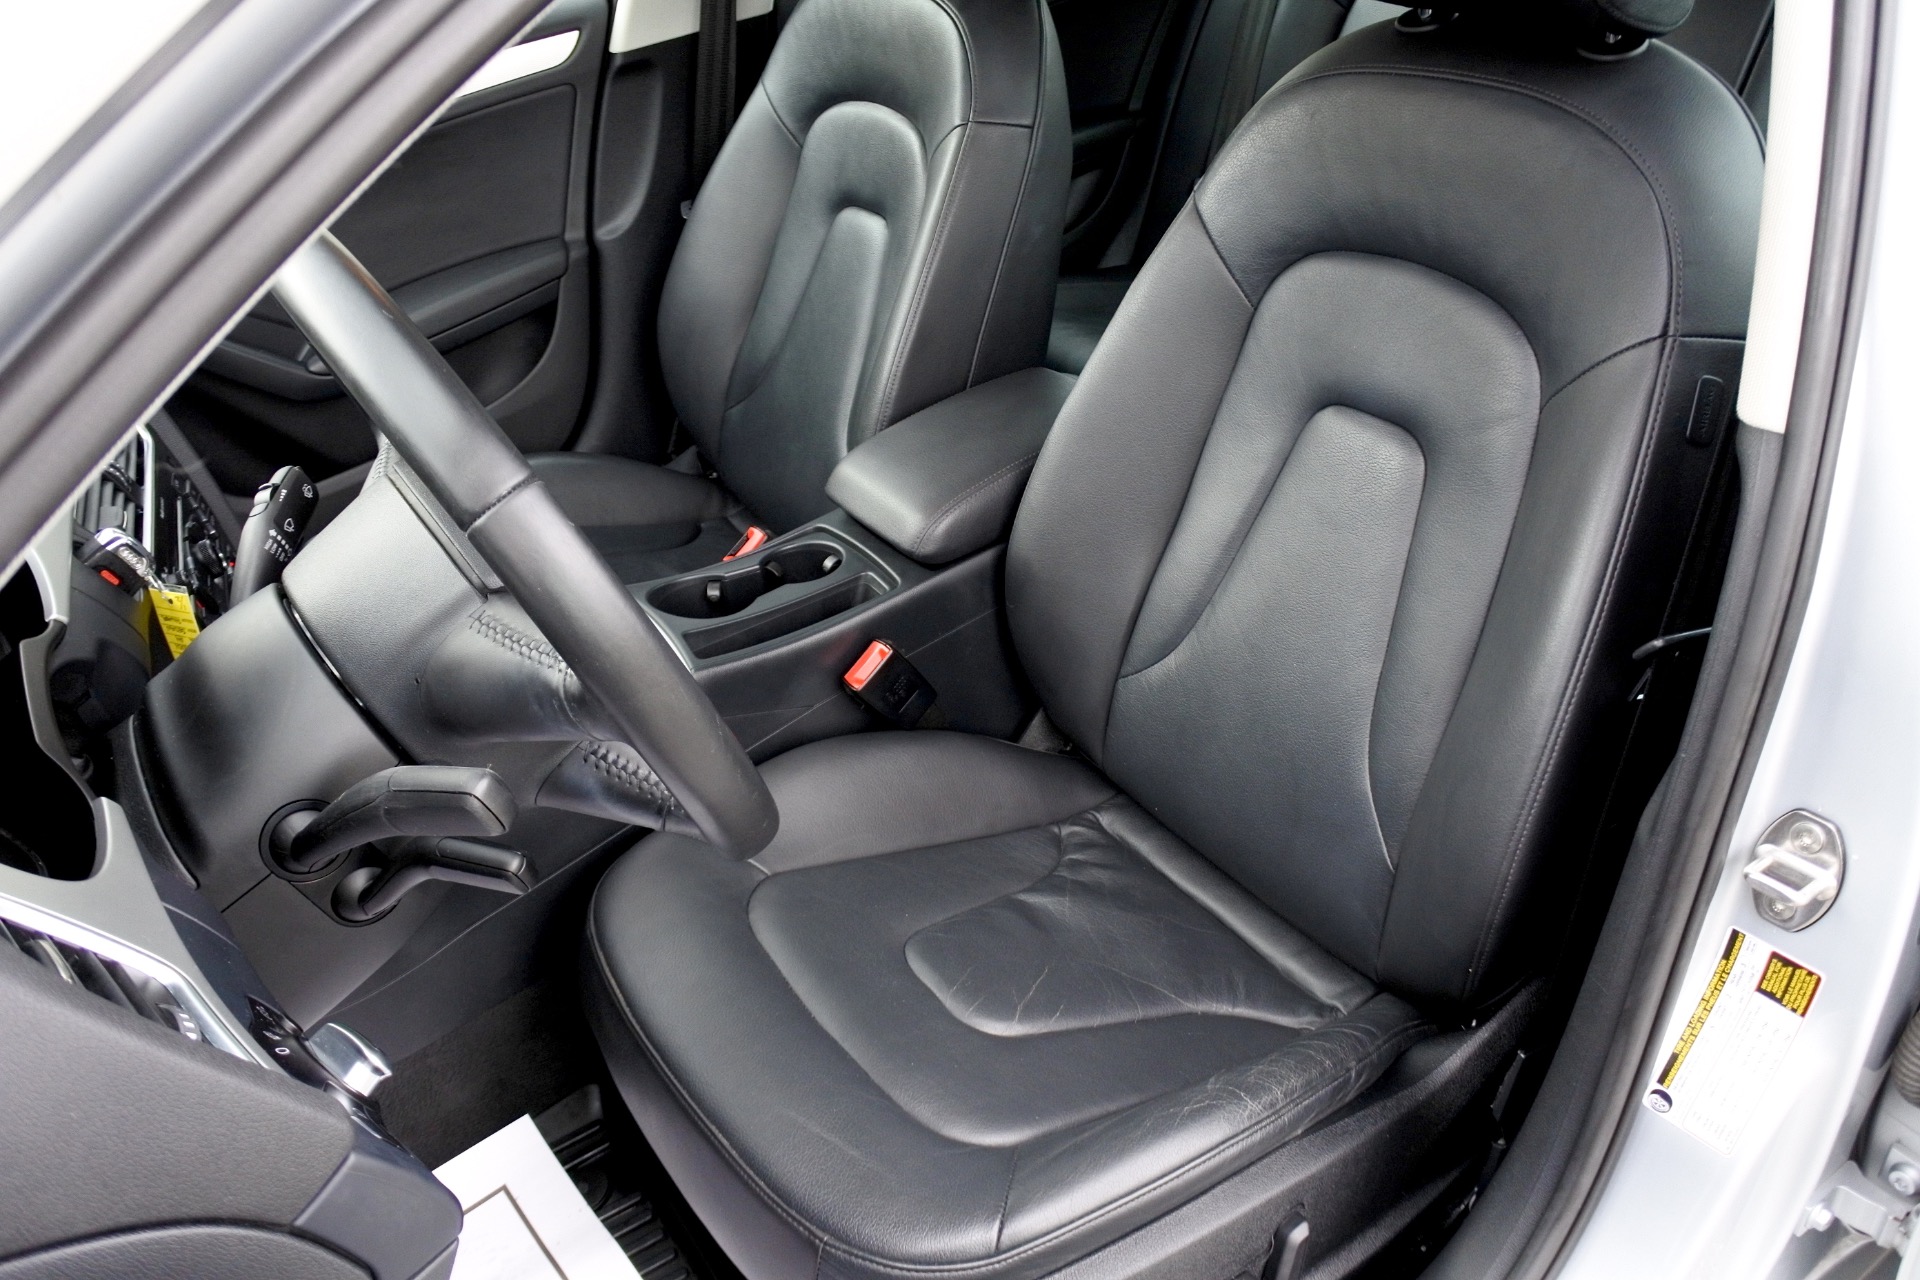 Preowned 2012 AUDI A4 2.0T Premium Plus Quattro for sale by Metro West Motorcars, LLC in Shrewsbury, MA